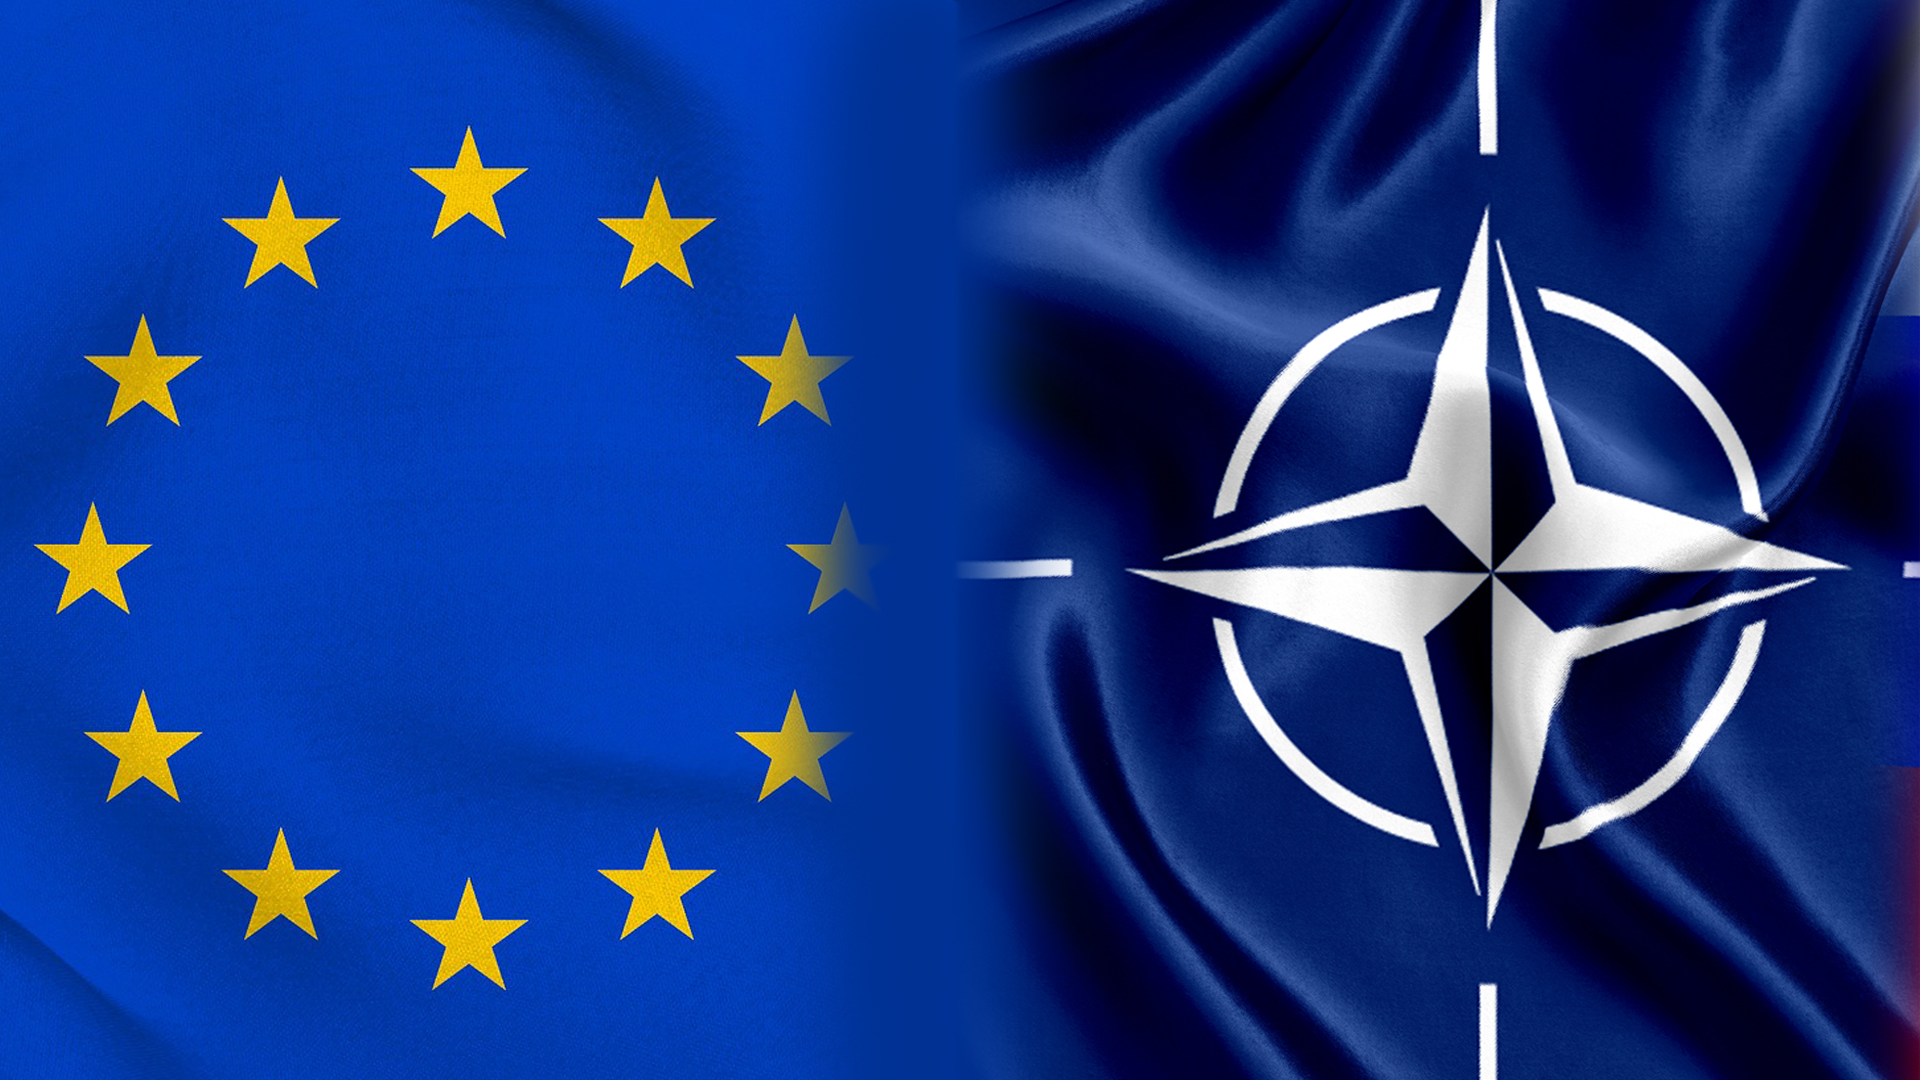 NATO & Europe post-Corona: A strategic vision for the future of regional security organizations